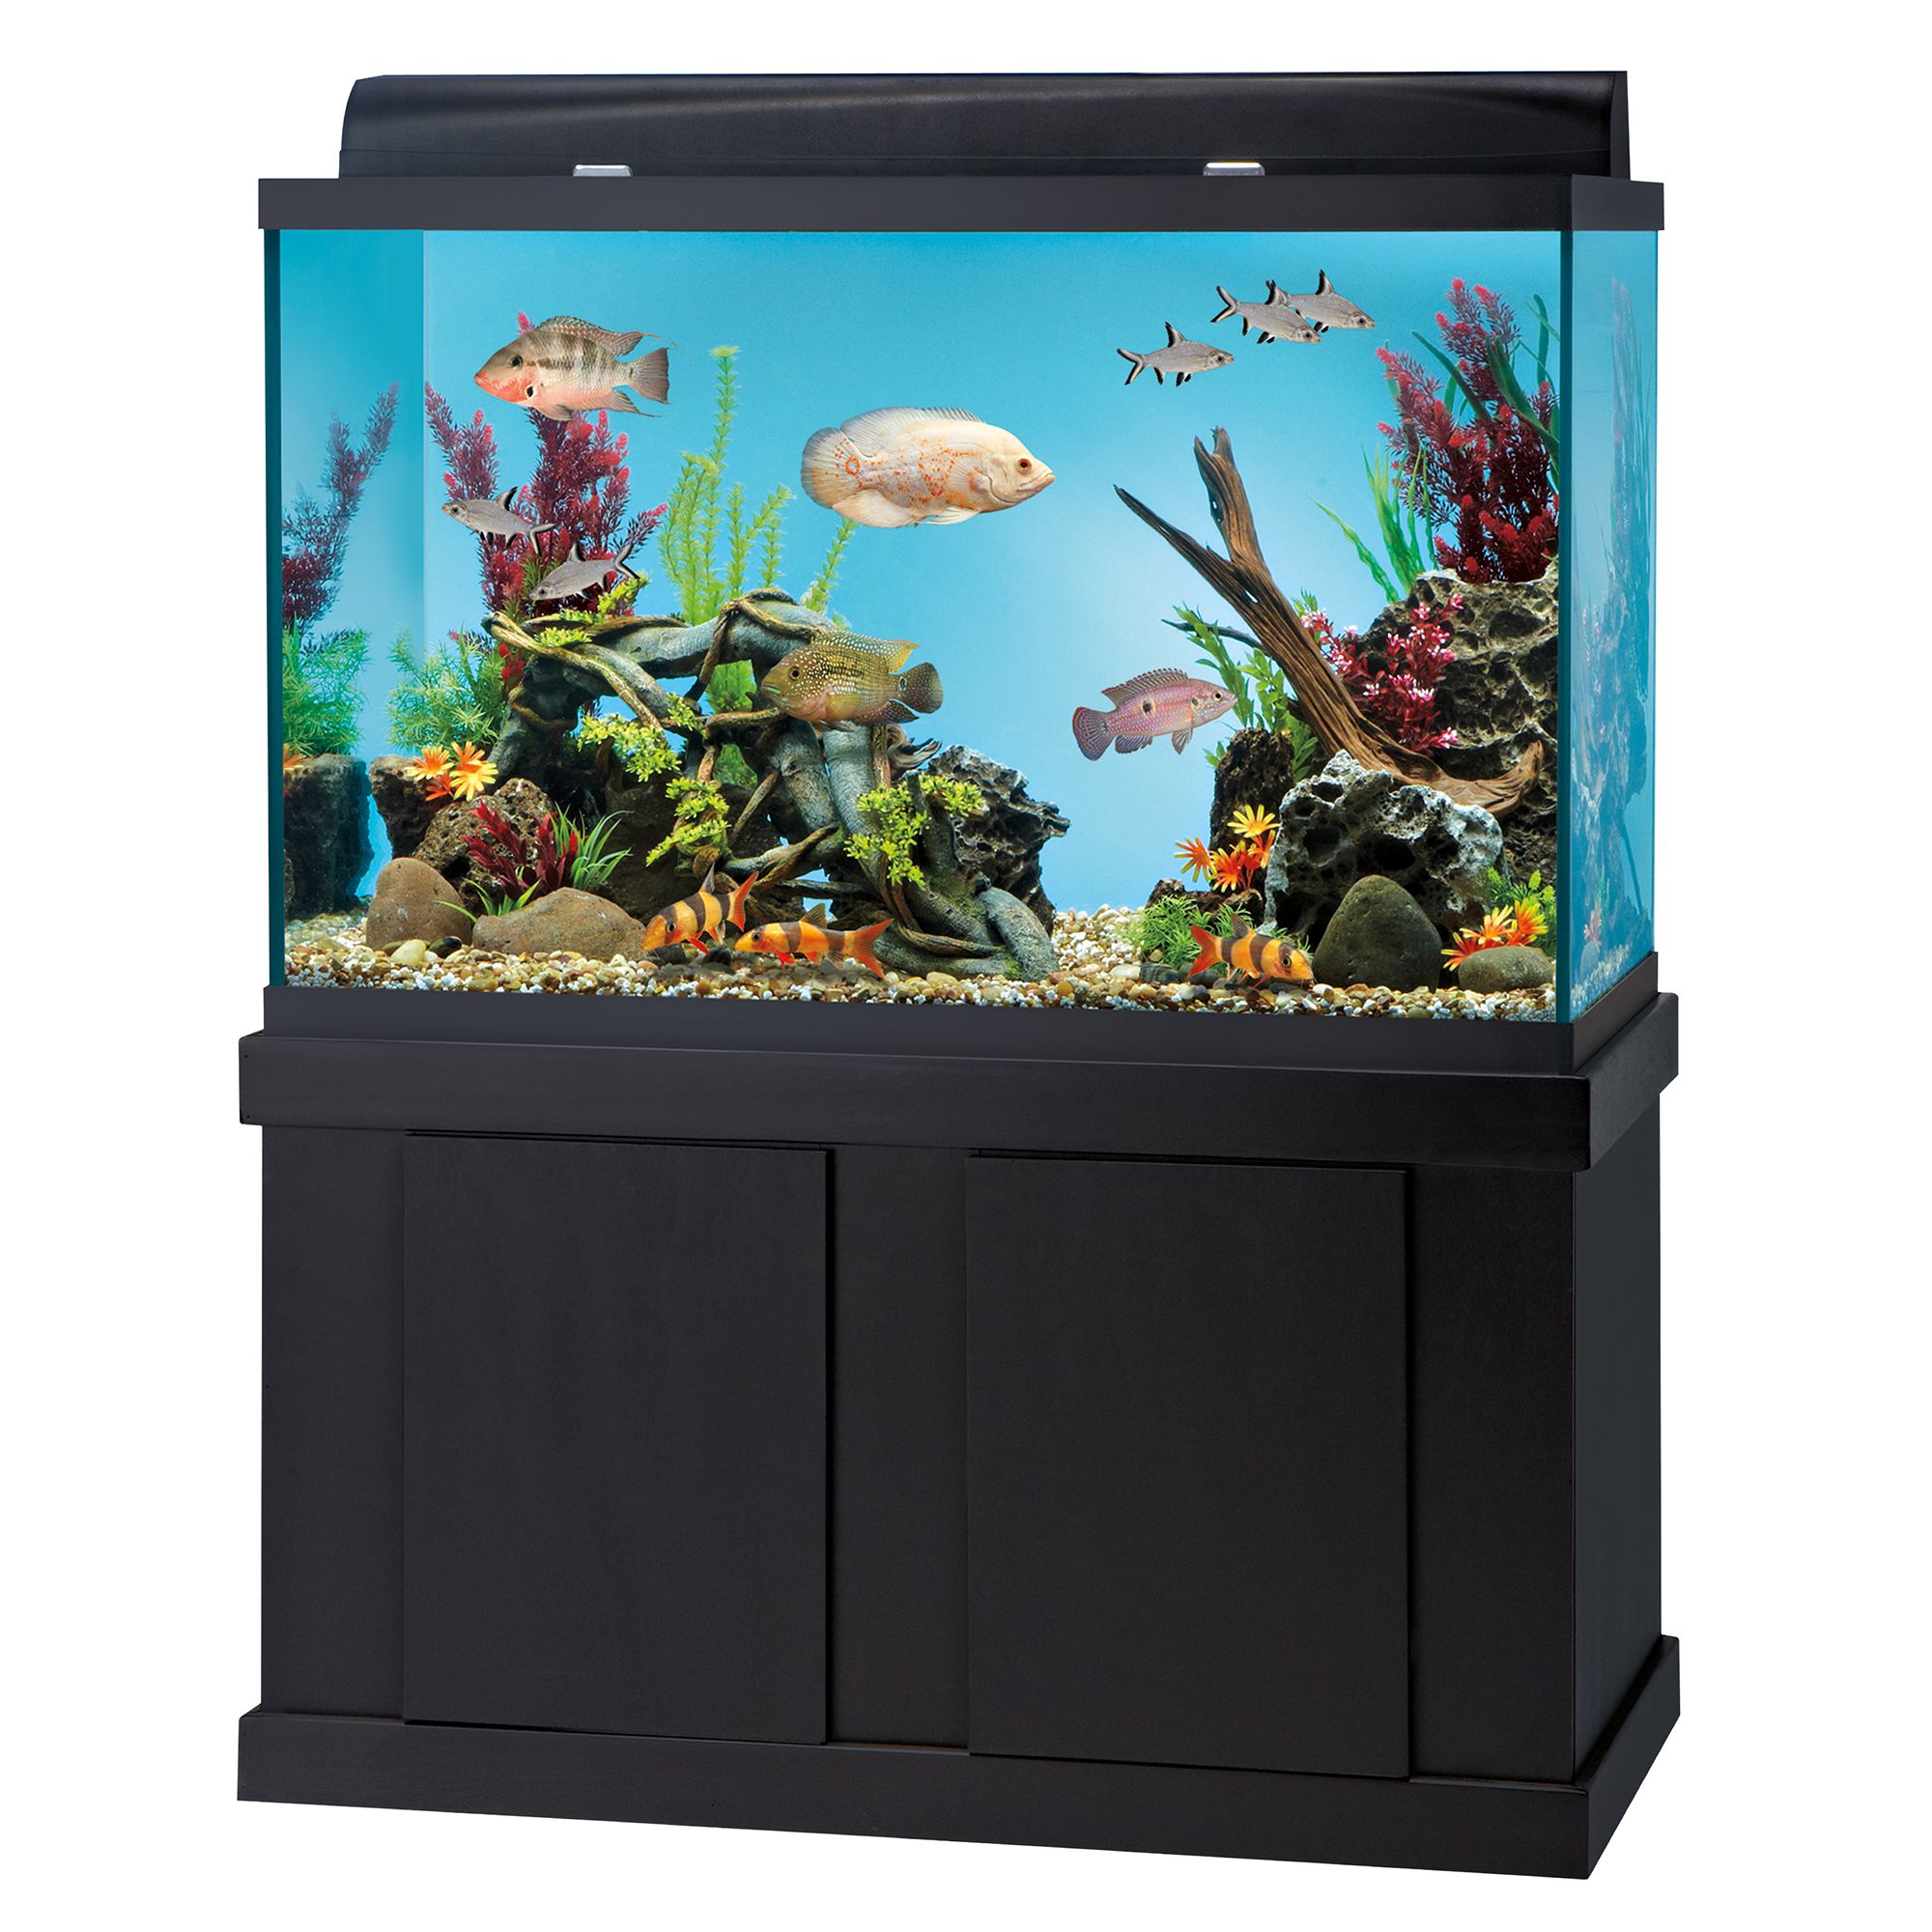 Top Fin® Aquarium Ensemble - 150 Gallon 